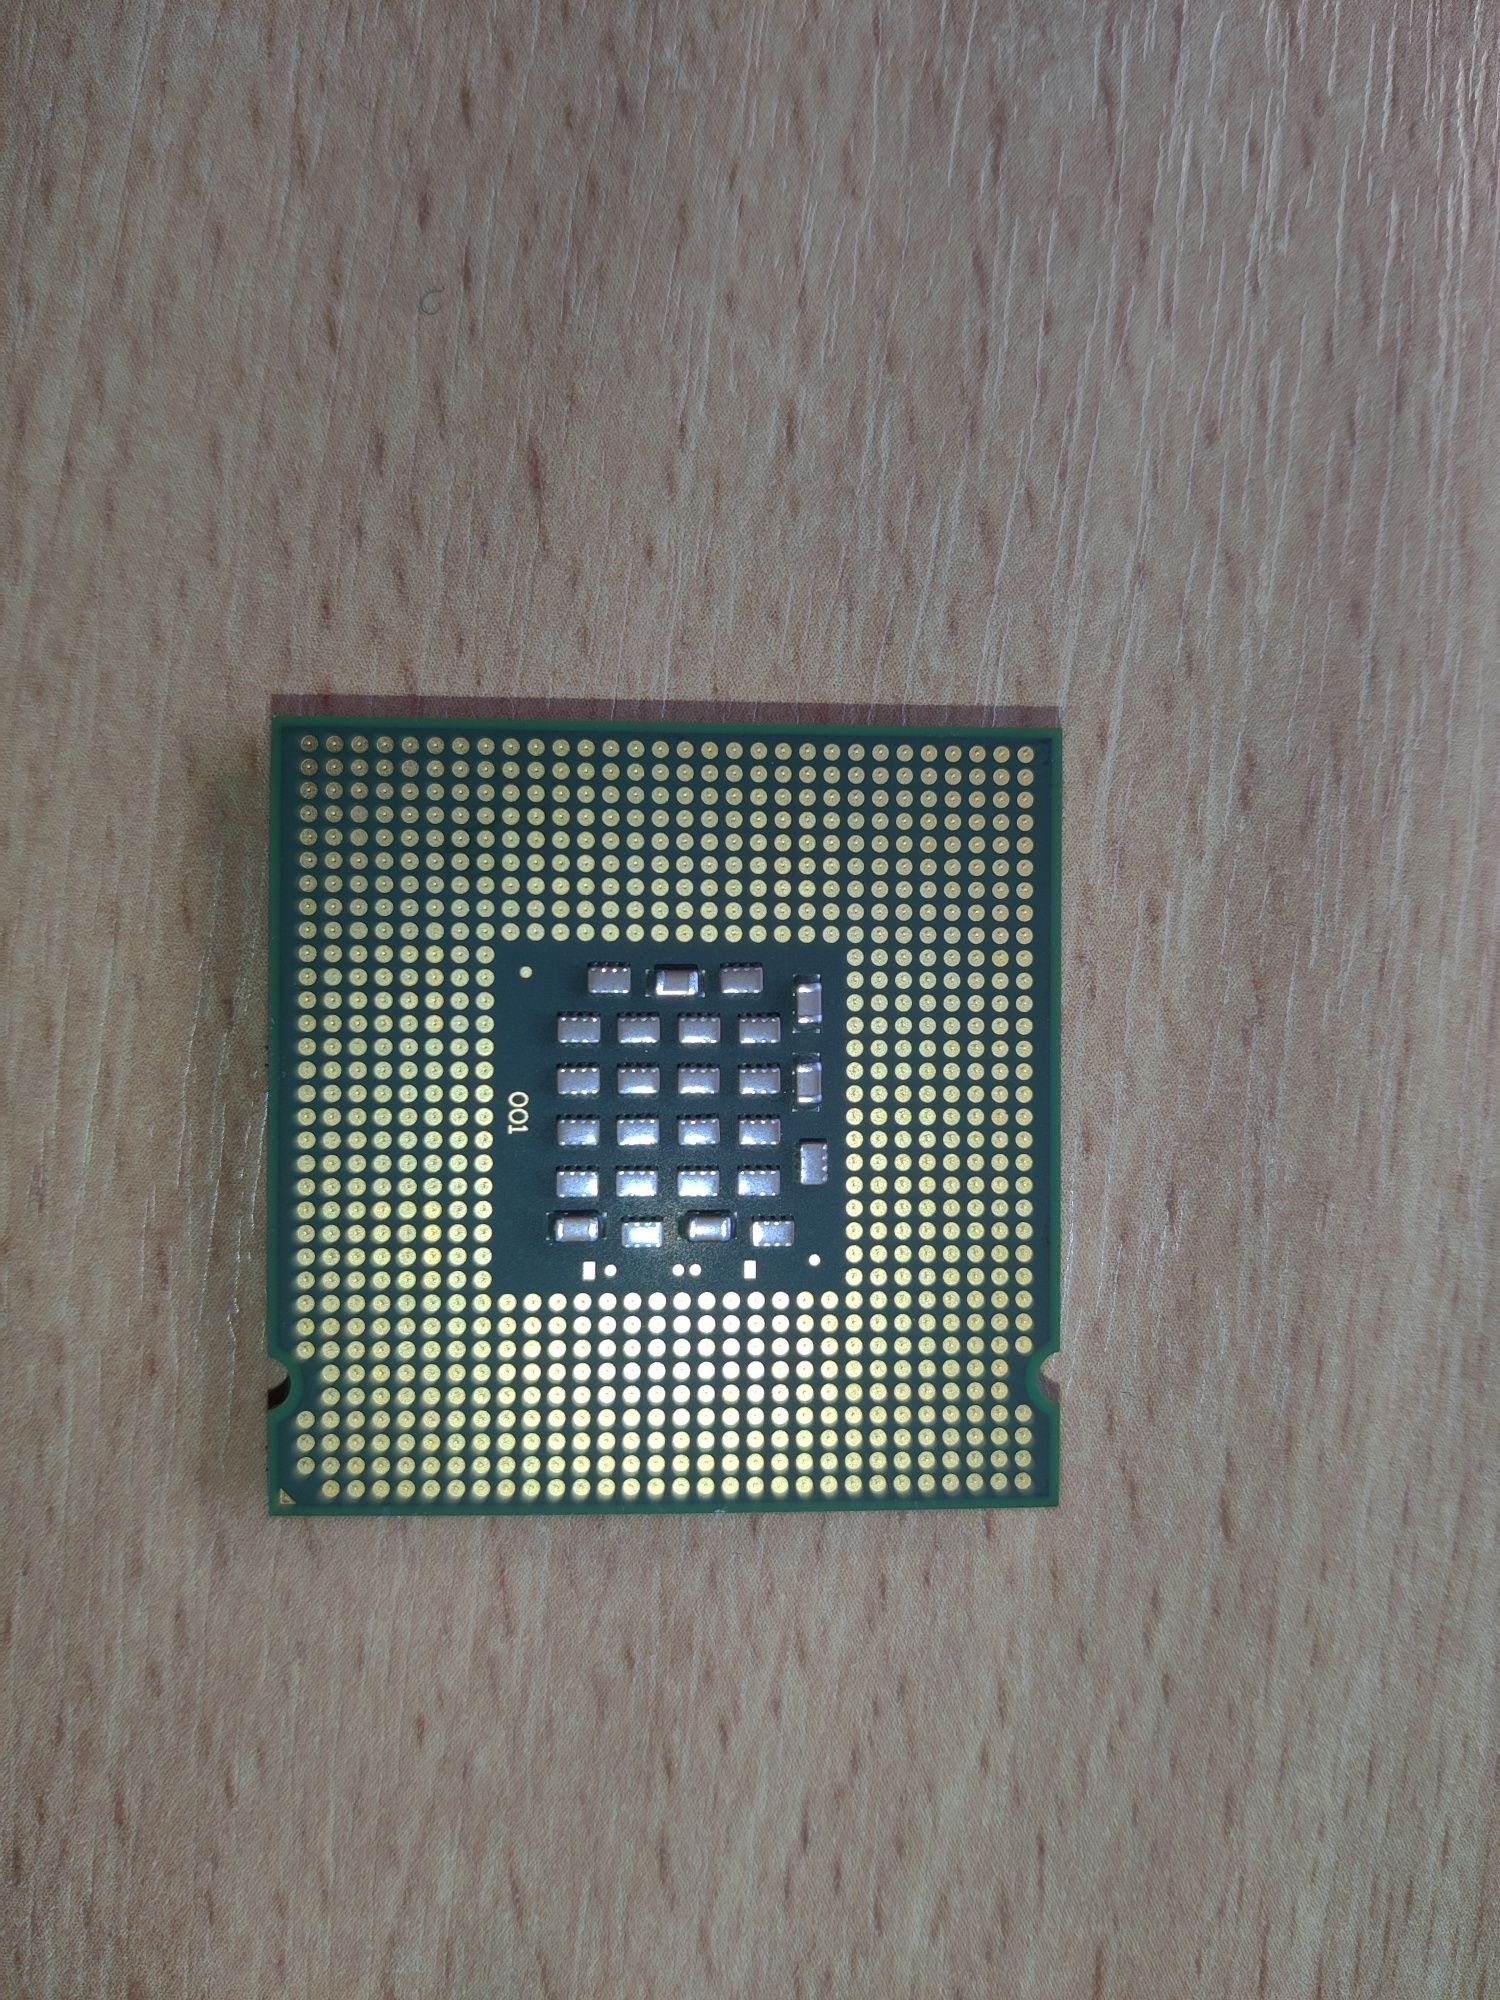 Процесор Intel Celeron D 351 3.20 GHz/256/533 (SL8HF) з кулером